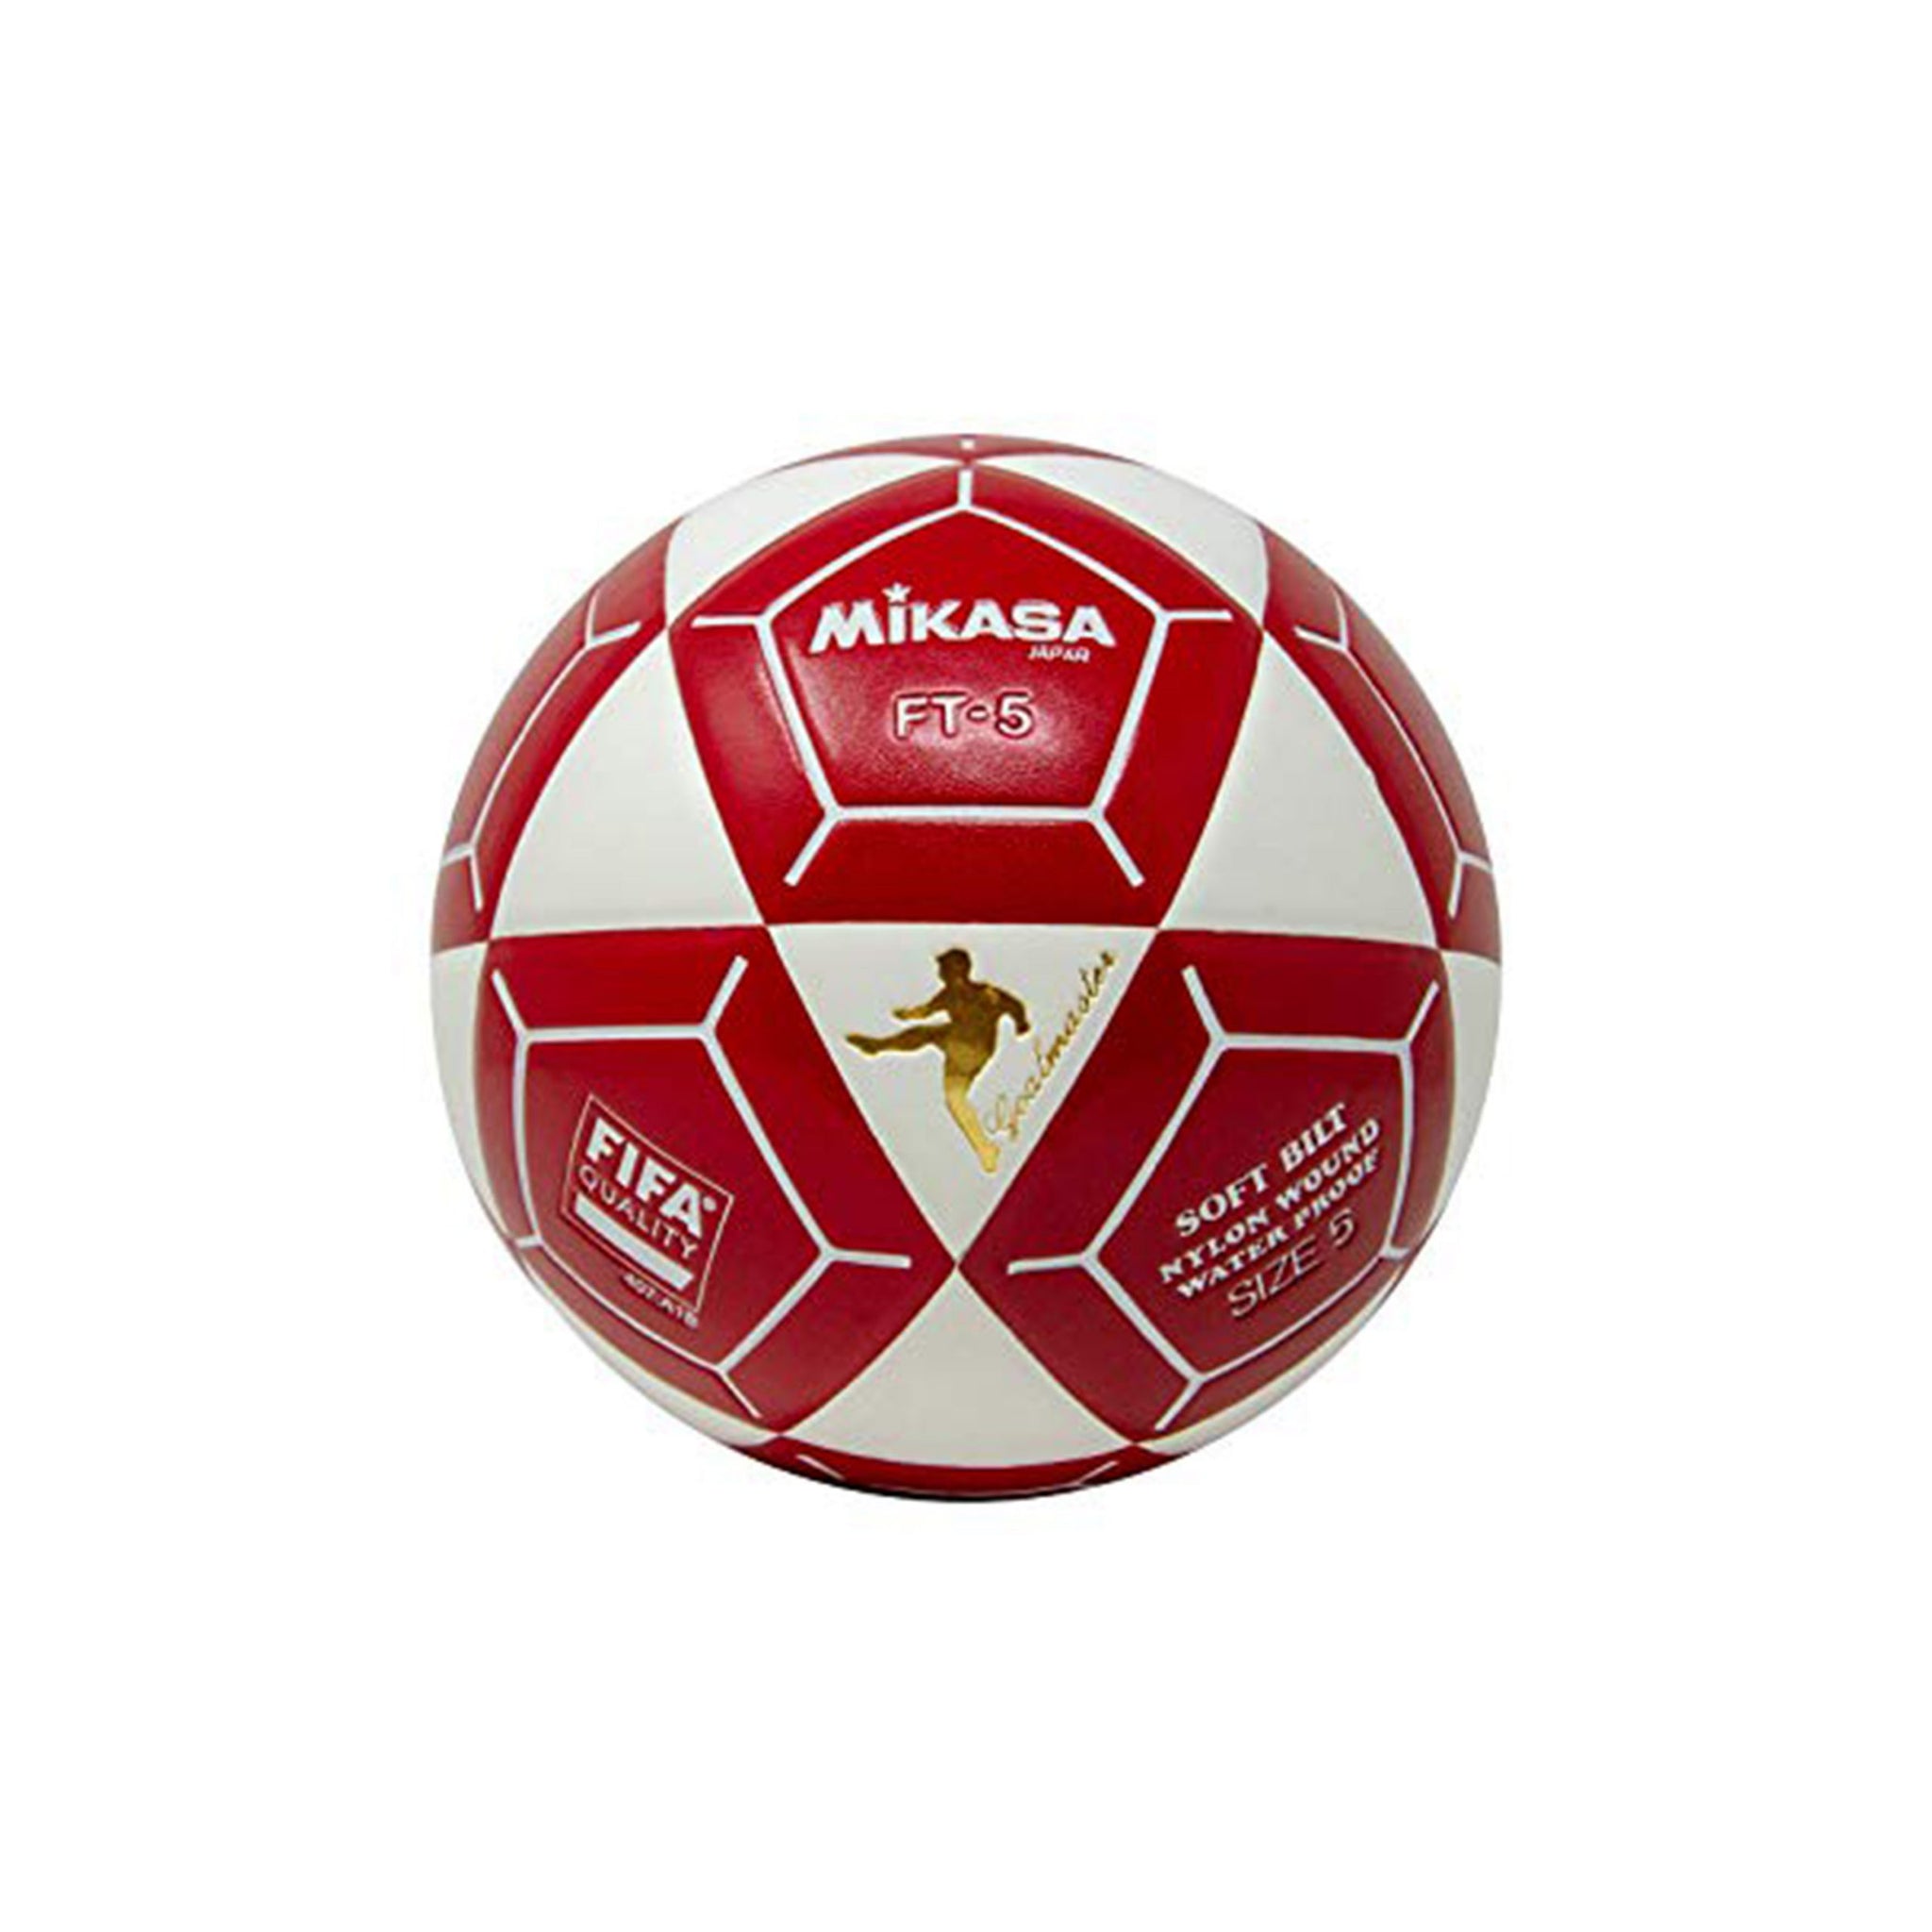 MIKASA FT - 5A Ball (White & Red)